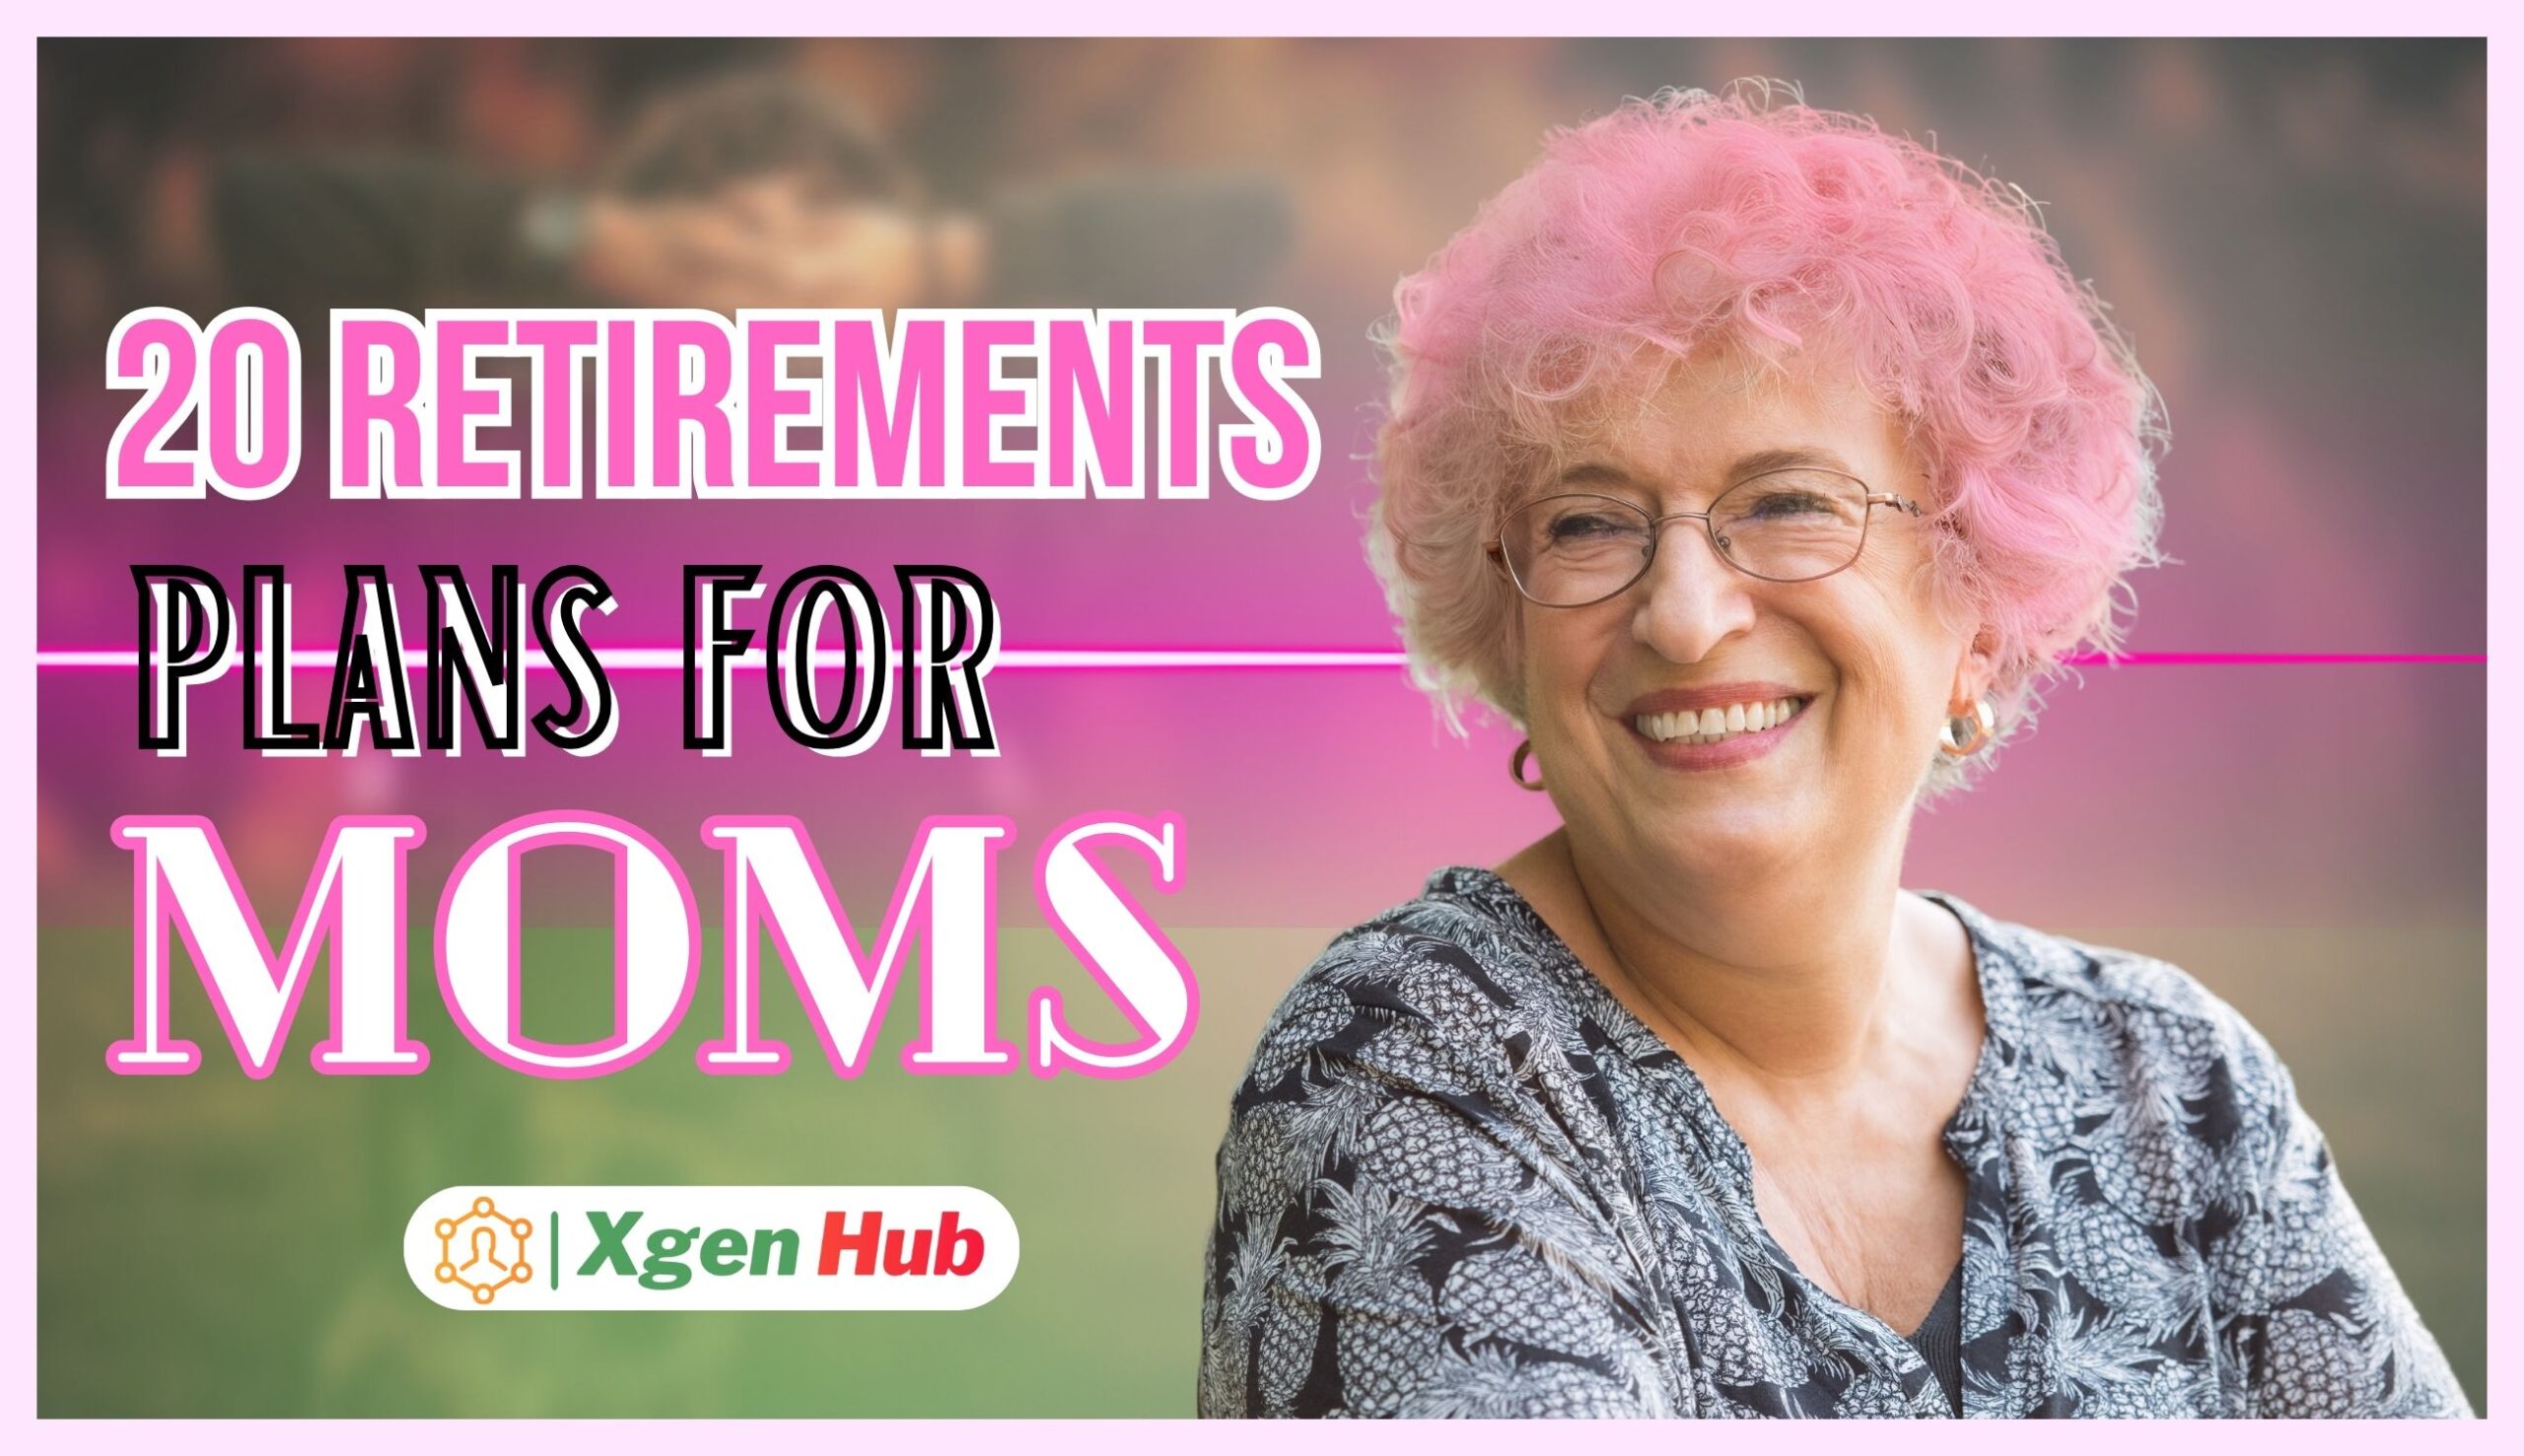 20 retirements plans for MOMS